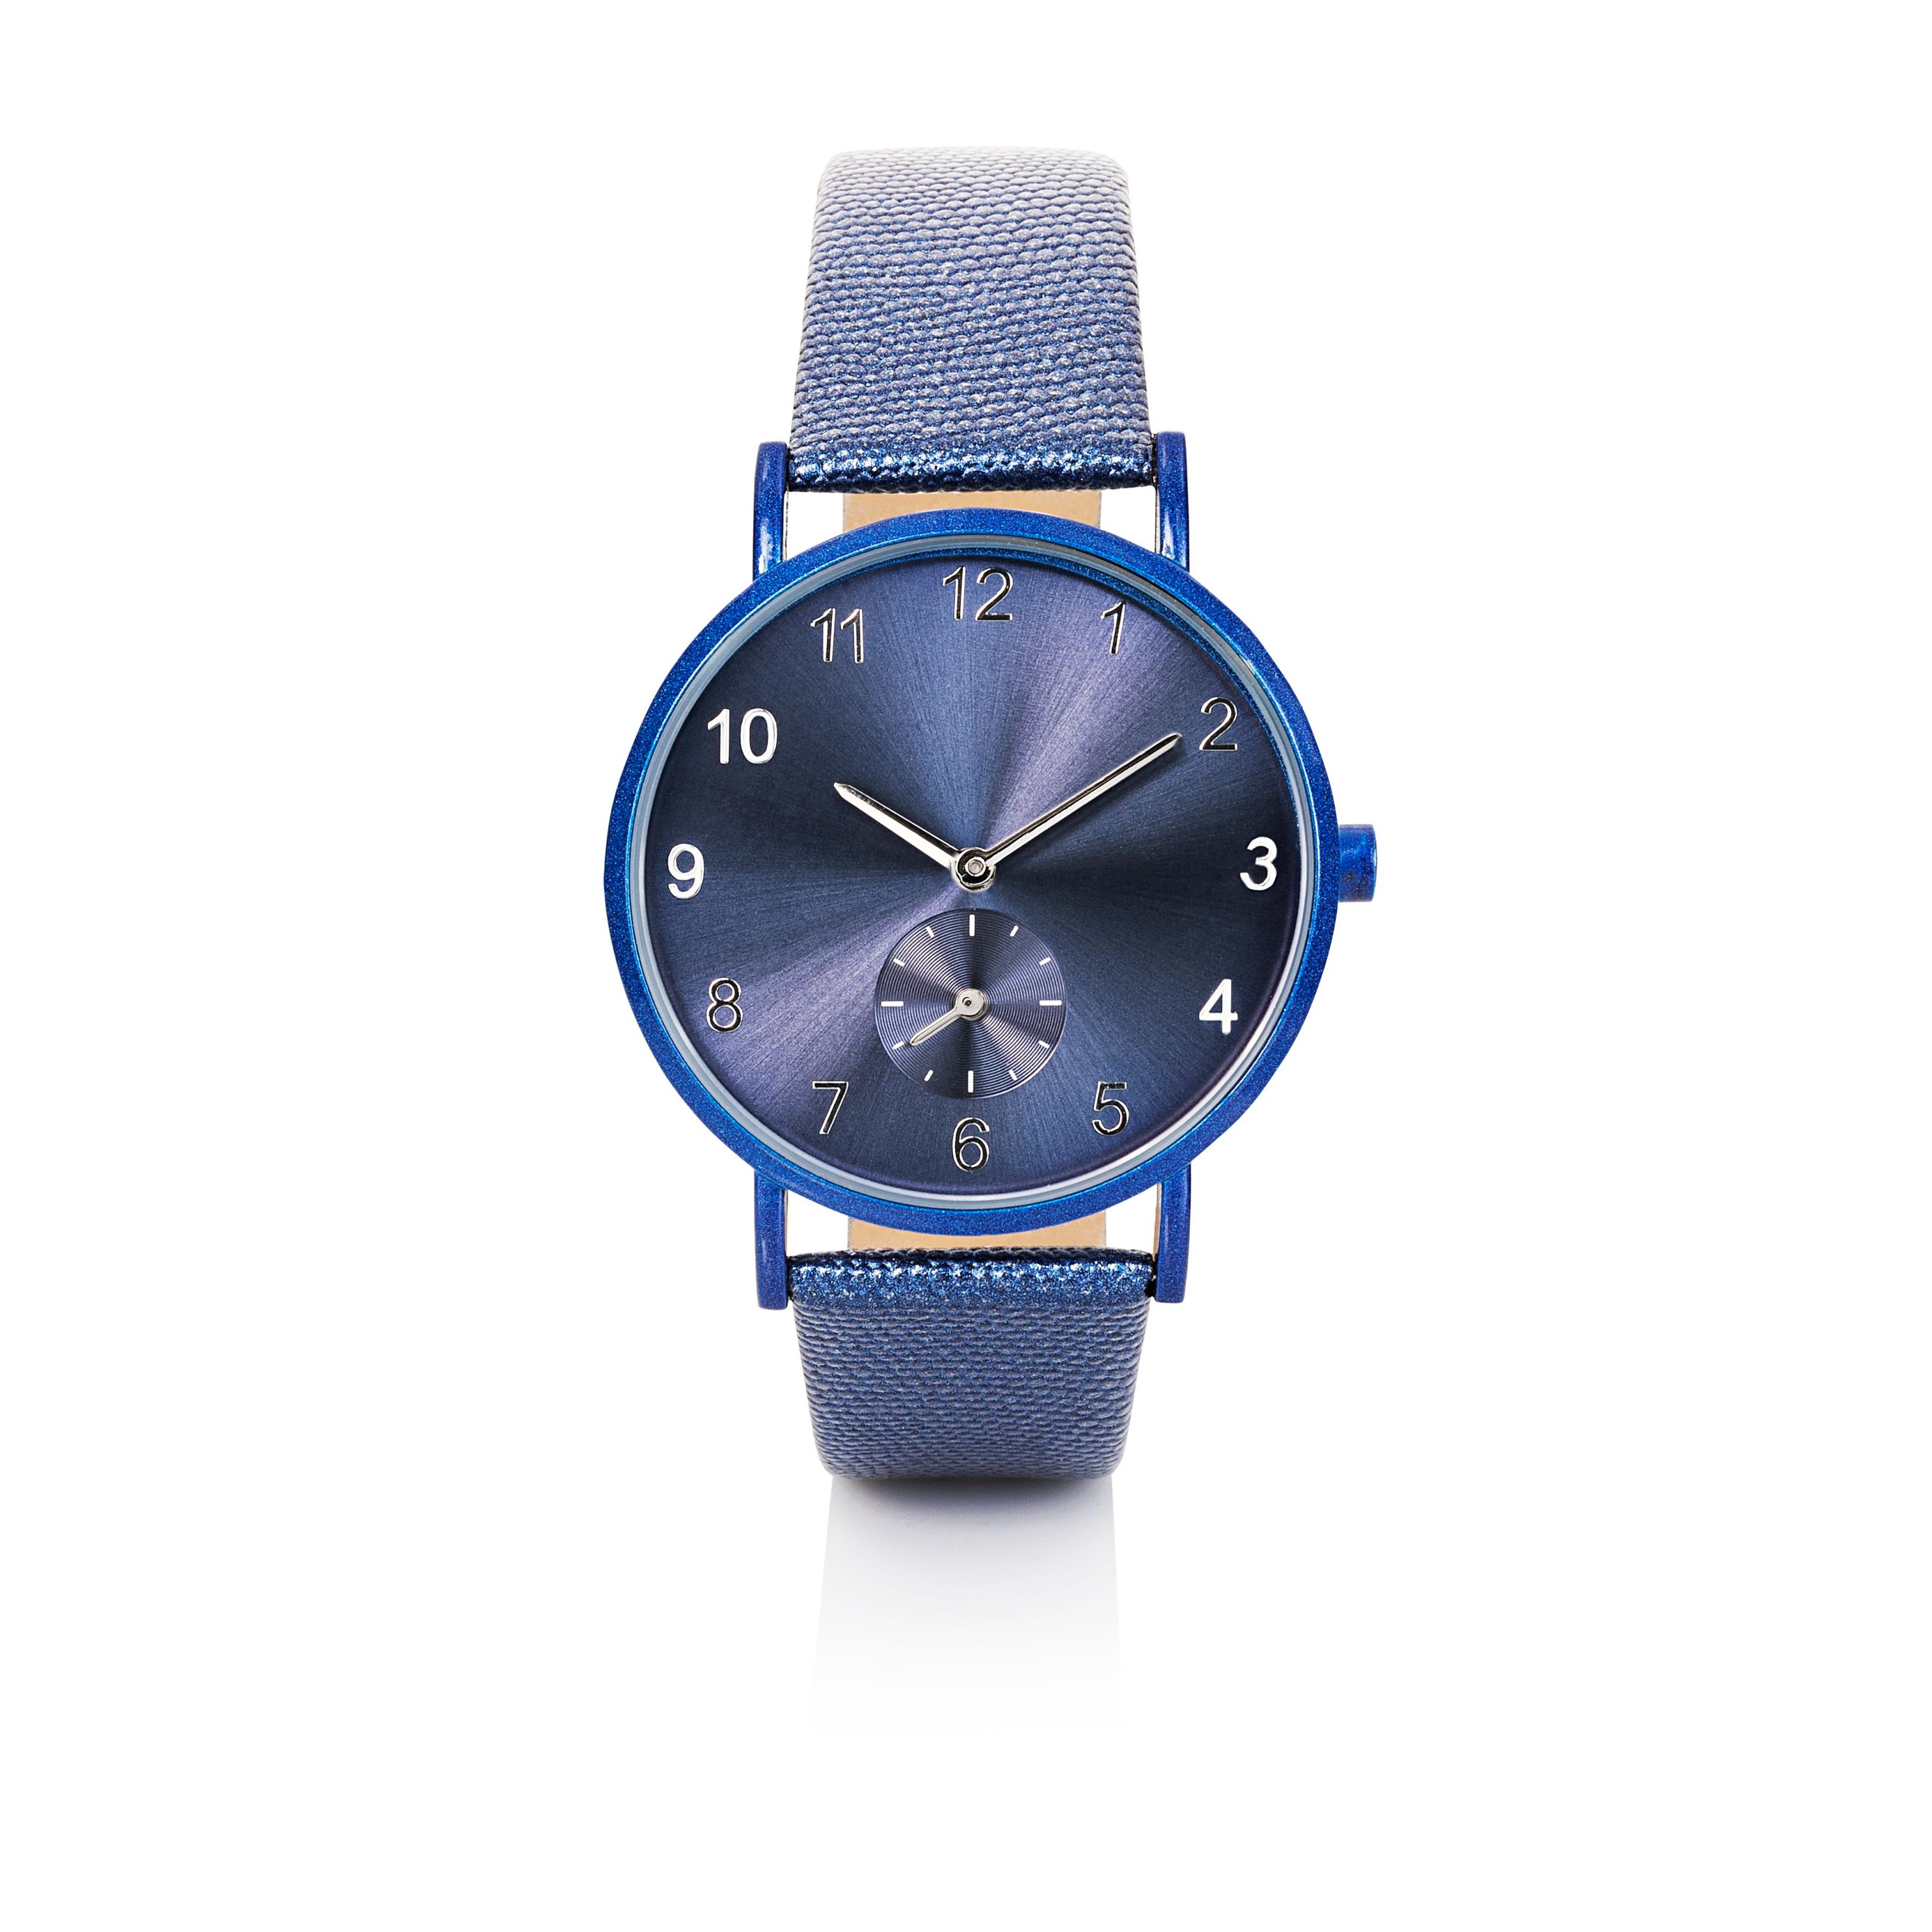 Damen-Armbanduhr Shine Farbe: dunkelblau bestellen | Weltbild.at